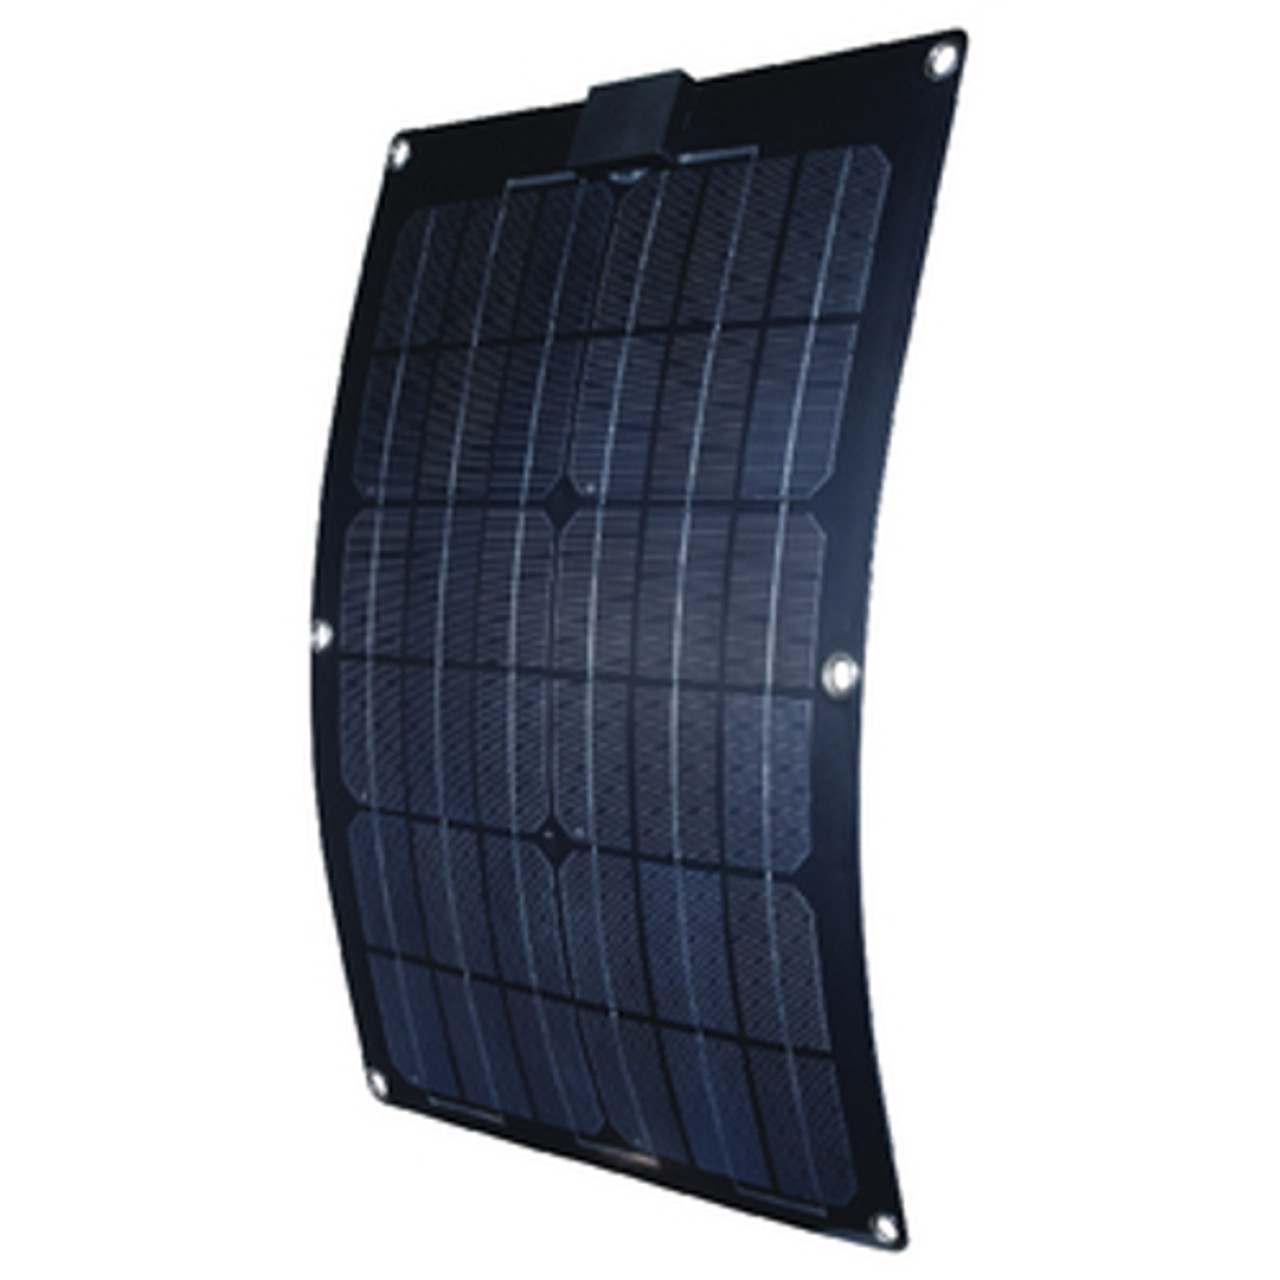 33.5 x 23.25 x 0.07 Inch 12 Volt - 50 Watt Semi Flex Monocrystalline Solar Panel